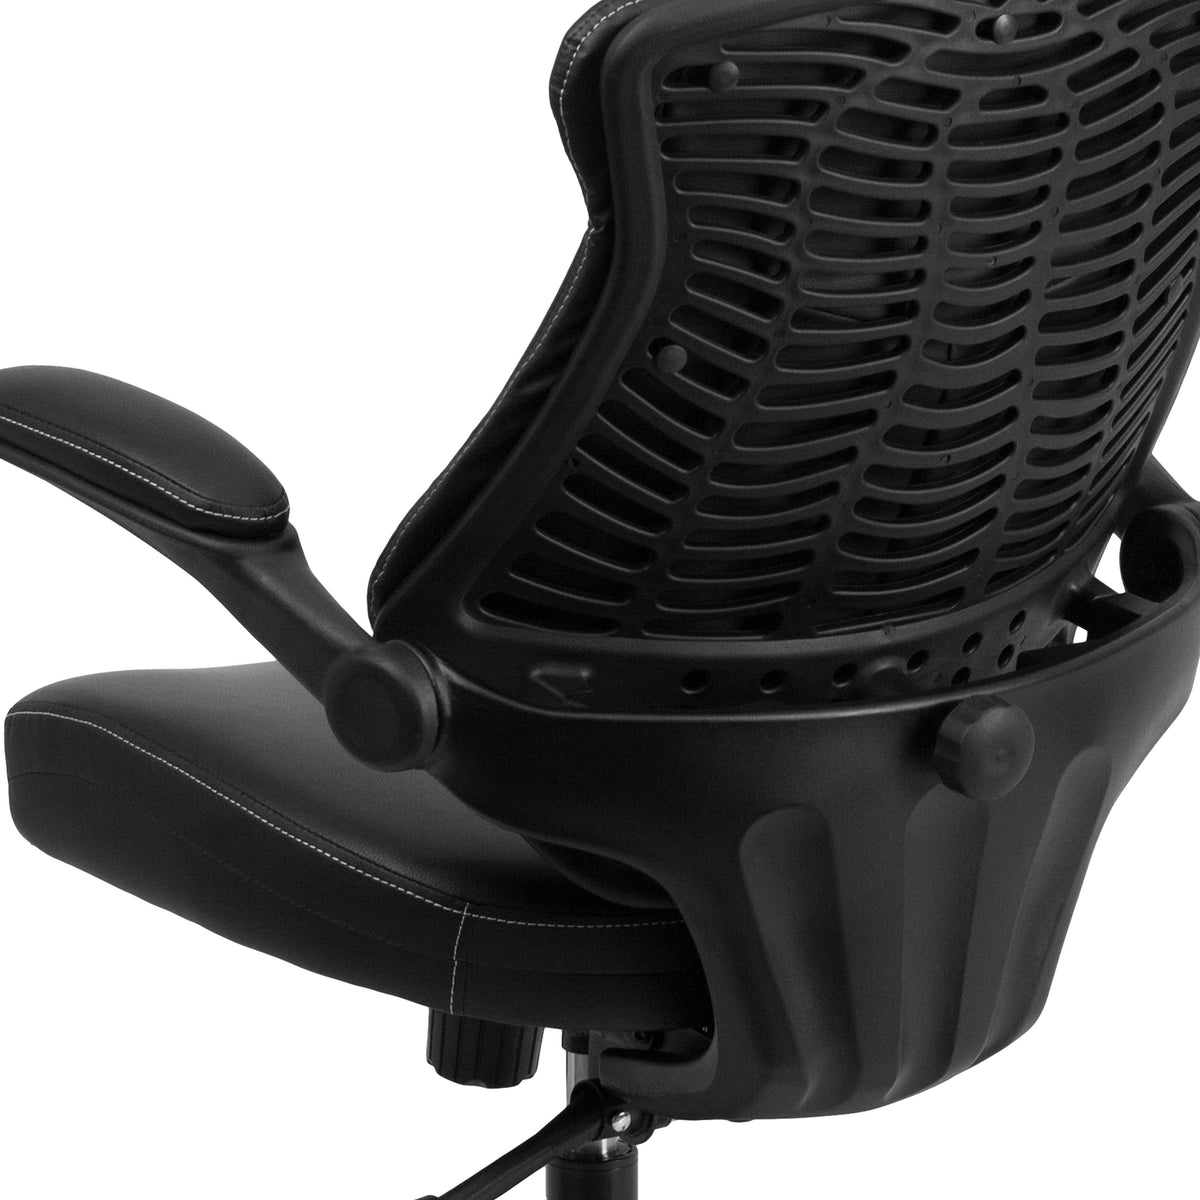 Mid-Back Black LeatherSoft Executive Ergonomic Chair with Back Angle Adjustment